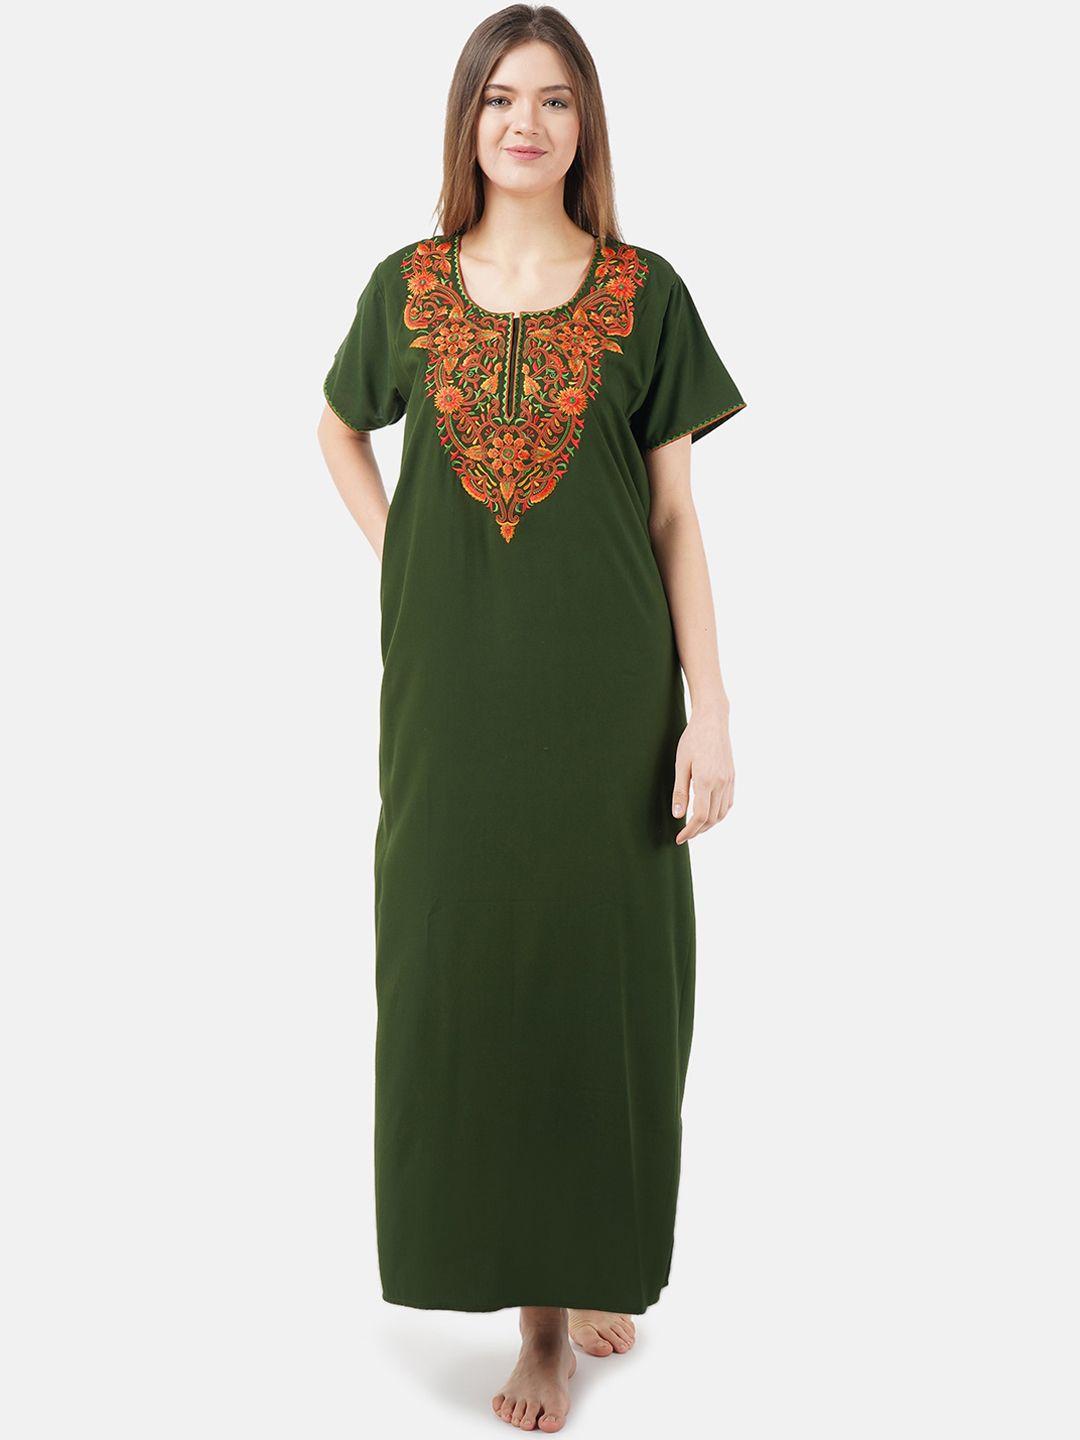 koi sleepwear olive green embroidered lissybissy cotton nightdress